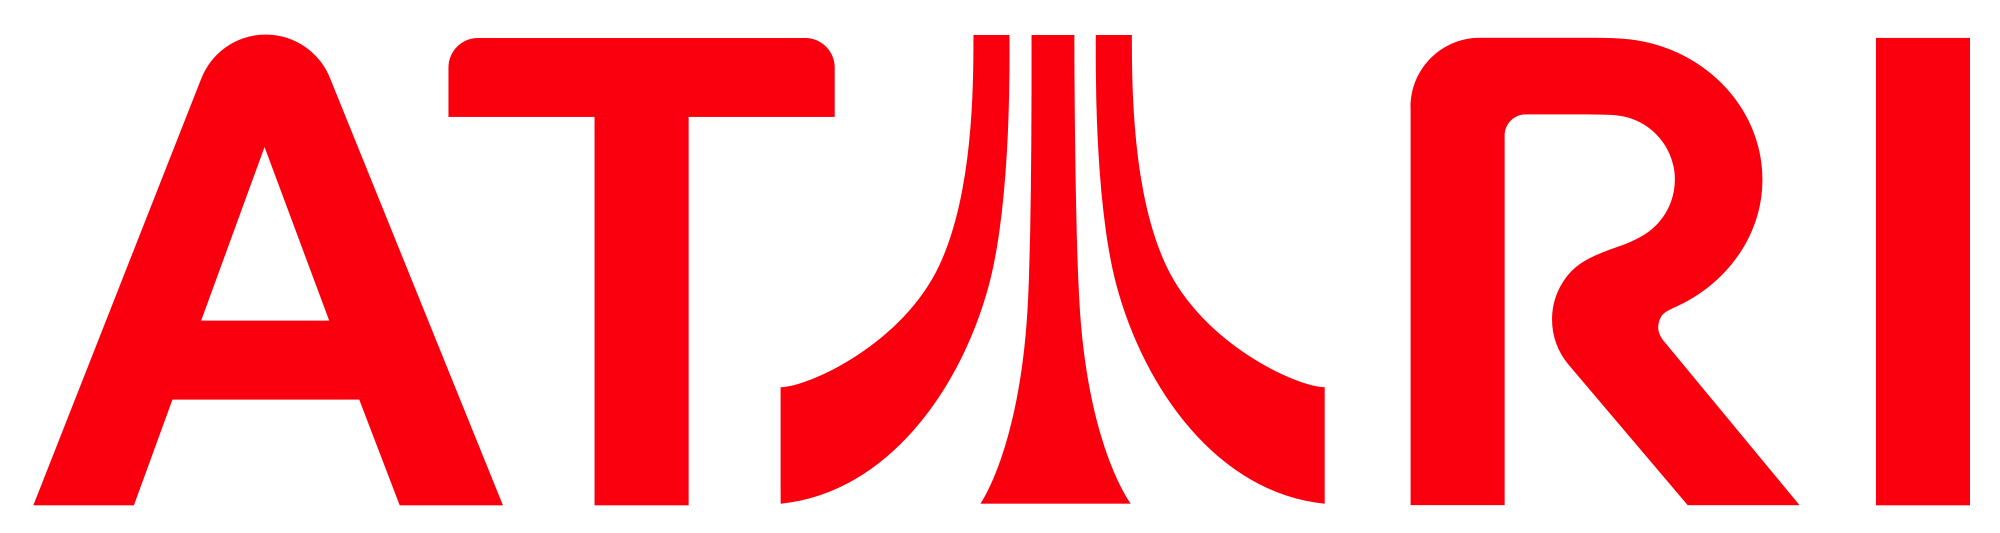 File:Atari 2600 logo.svg